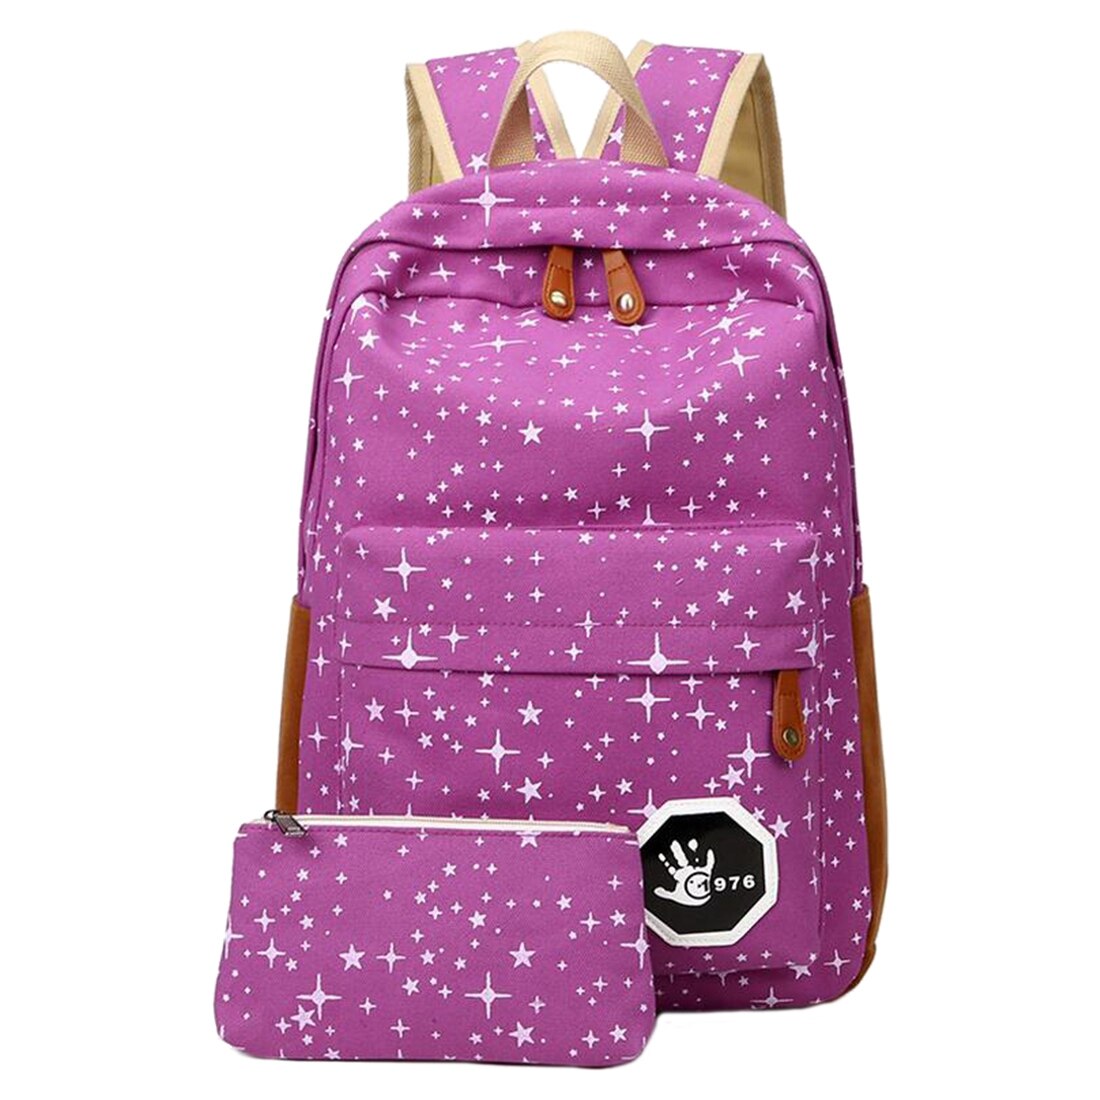 New 2 pcs/set Fashion Star Women Men Canvas Backpack School Bag For girl Boy Teenagers Casual Travel bags Rucksack - ebowsos